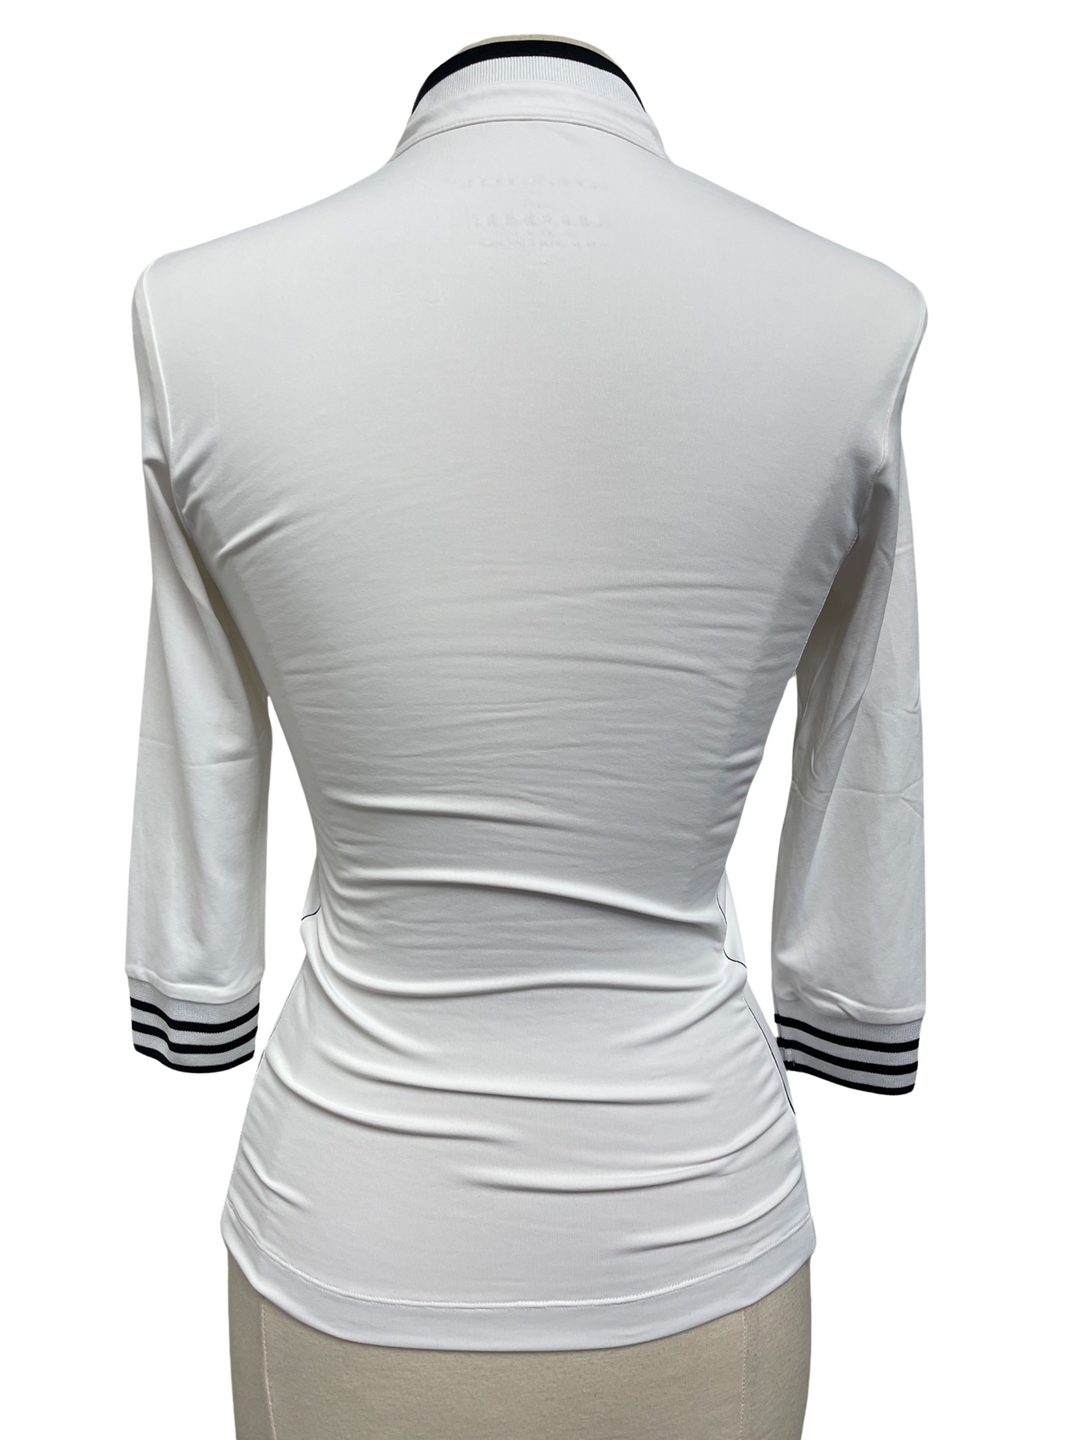 Lohla Sport - The Carolyn 3/4 Sleeve Top - White/Navy - Skorzie